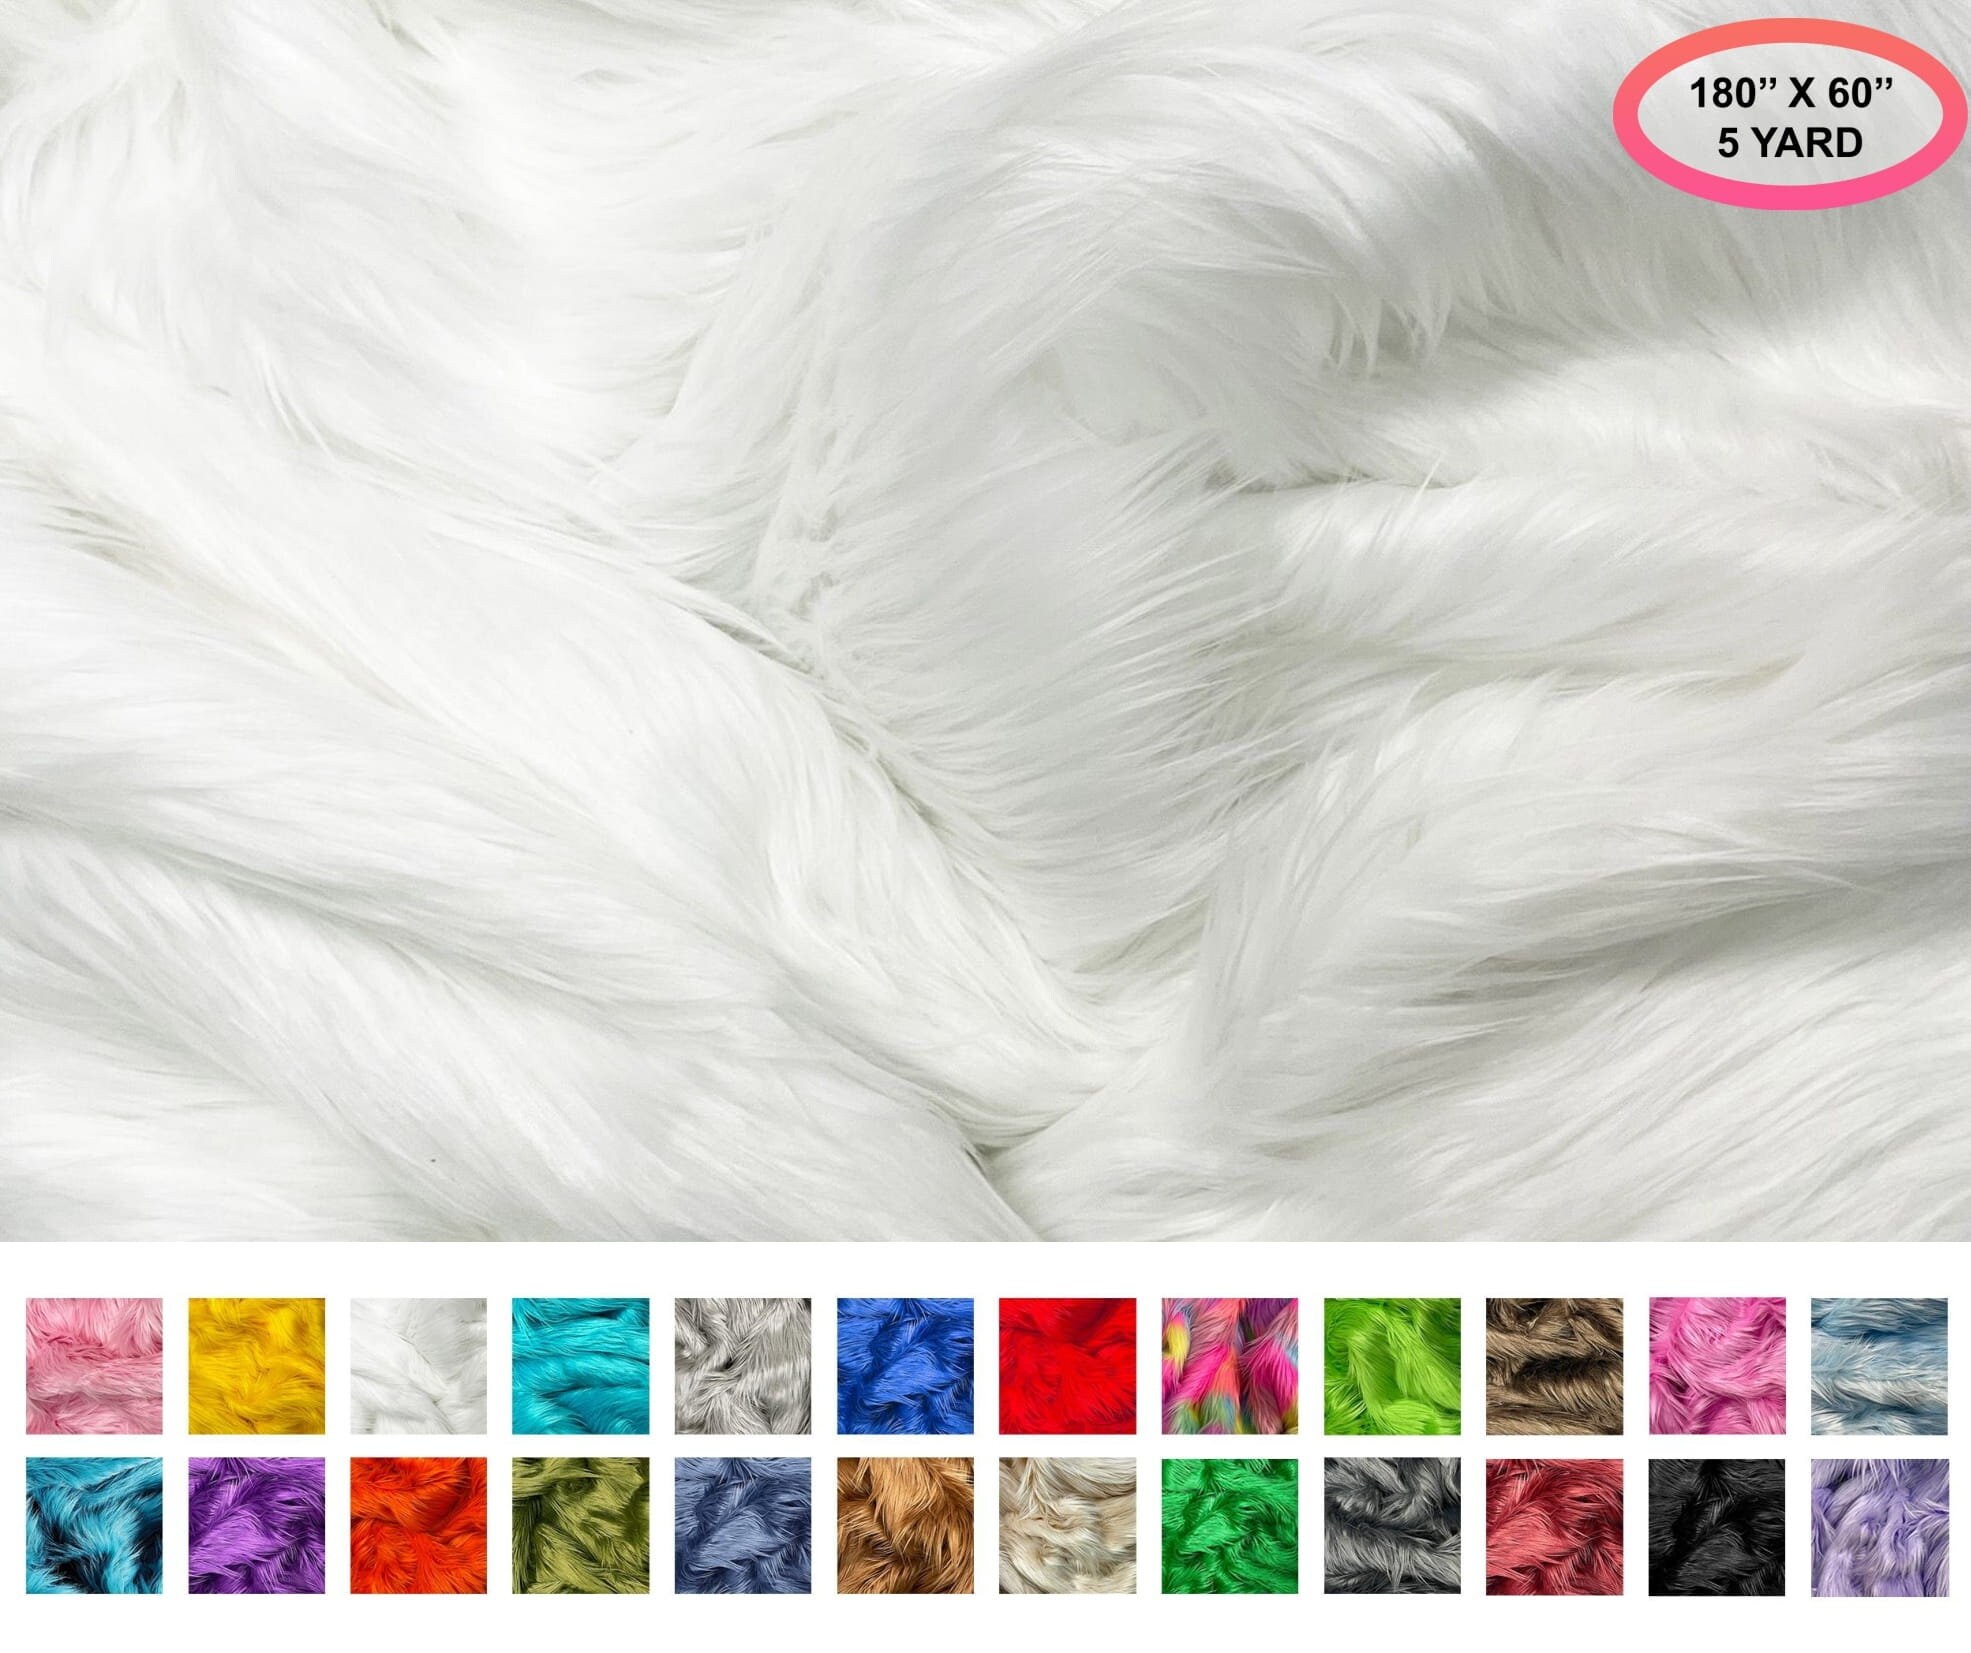 Husky Faux Fur Fabric by the Yard_ Shaggy Long Pile Fake Fur Material/ 2  TONE Fur Royal/black 